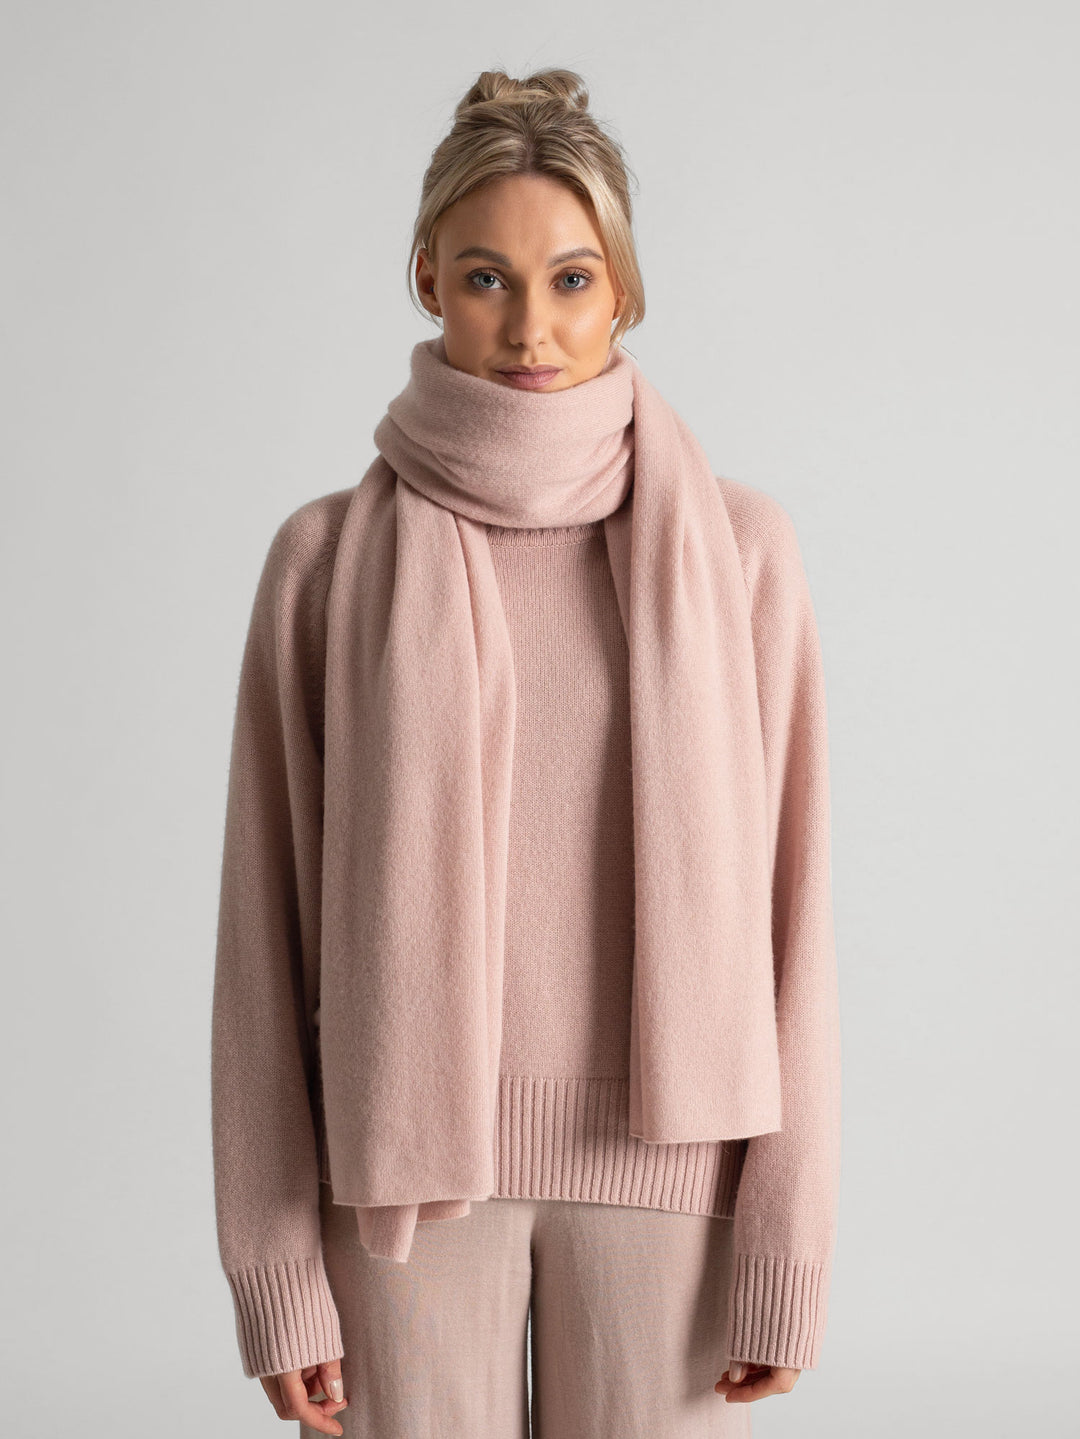 Cashmere scarf "Signature" in 100% cashmere. Color: Rose Glow. Scandinavian design by Kashmina